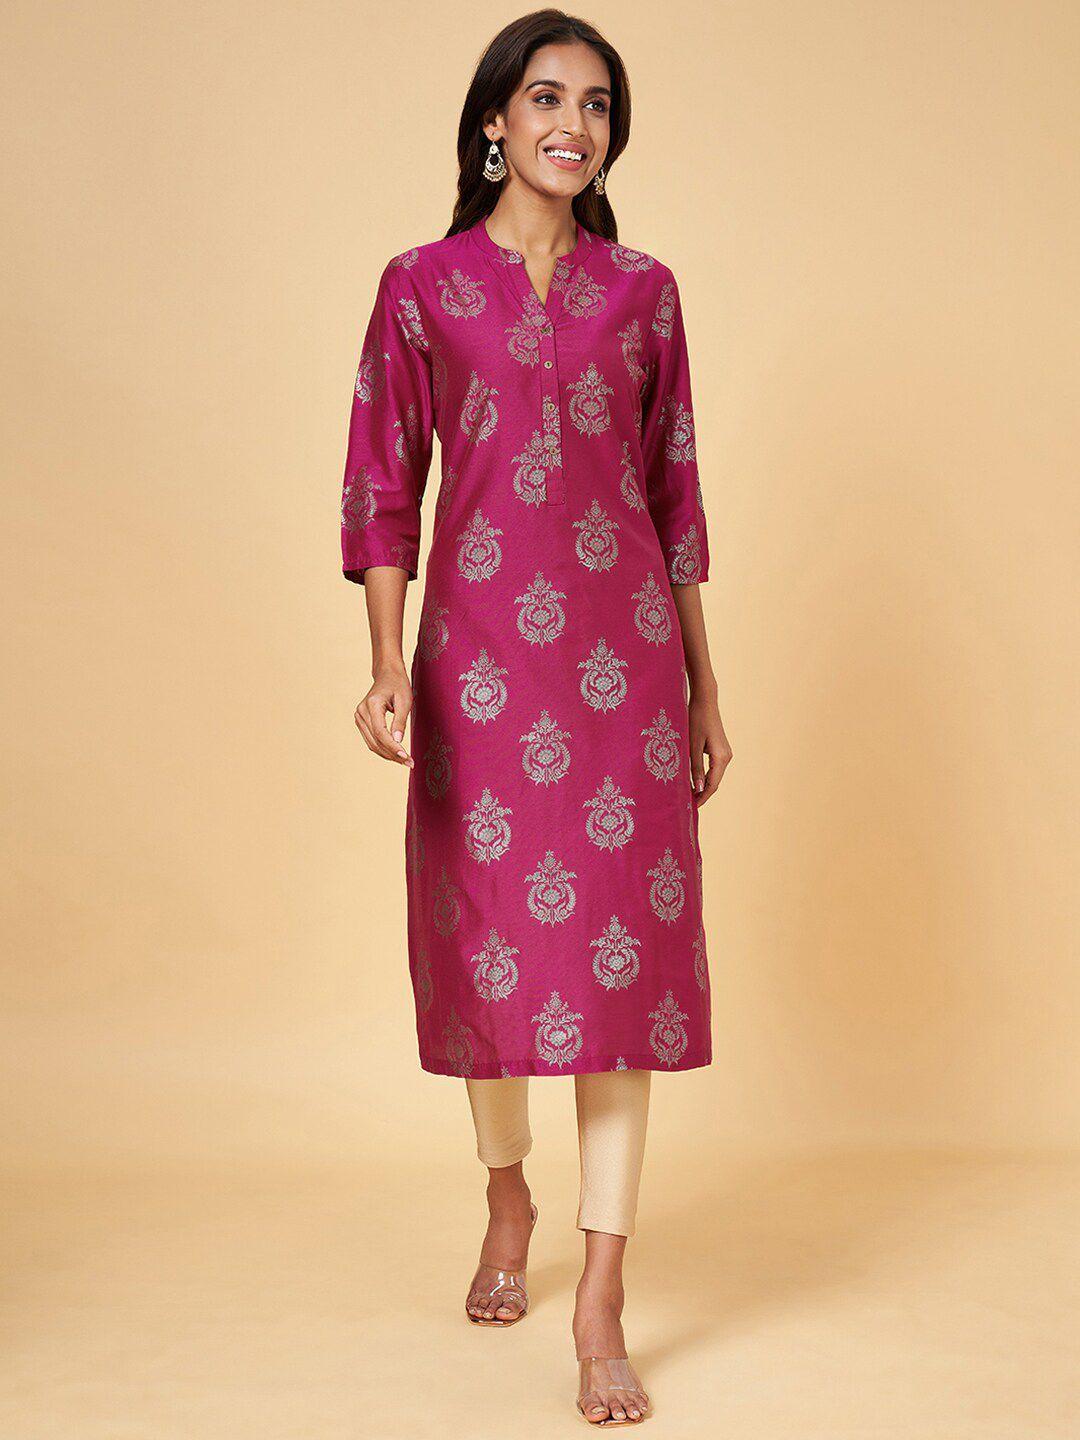 rangmanch by pantaloons women magenta ethnic motifs printed keyhole neck sequinned kurta